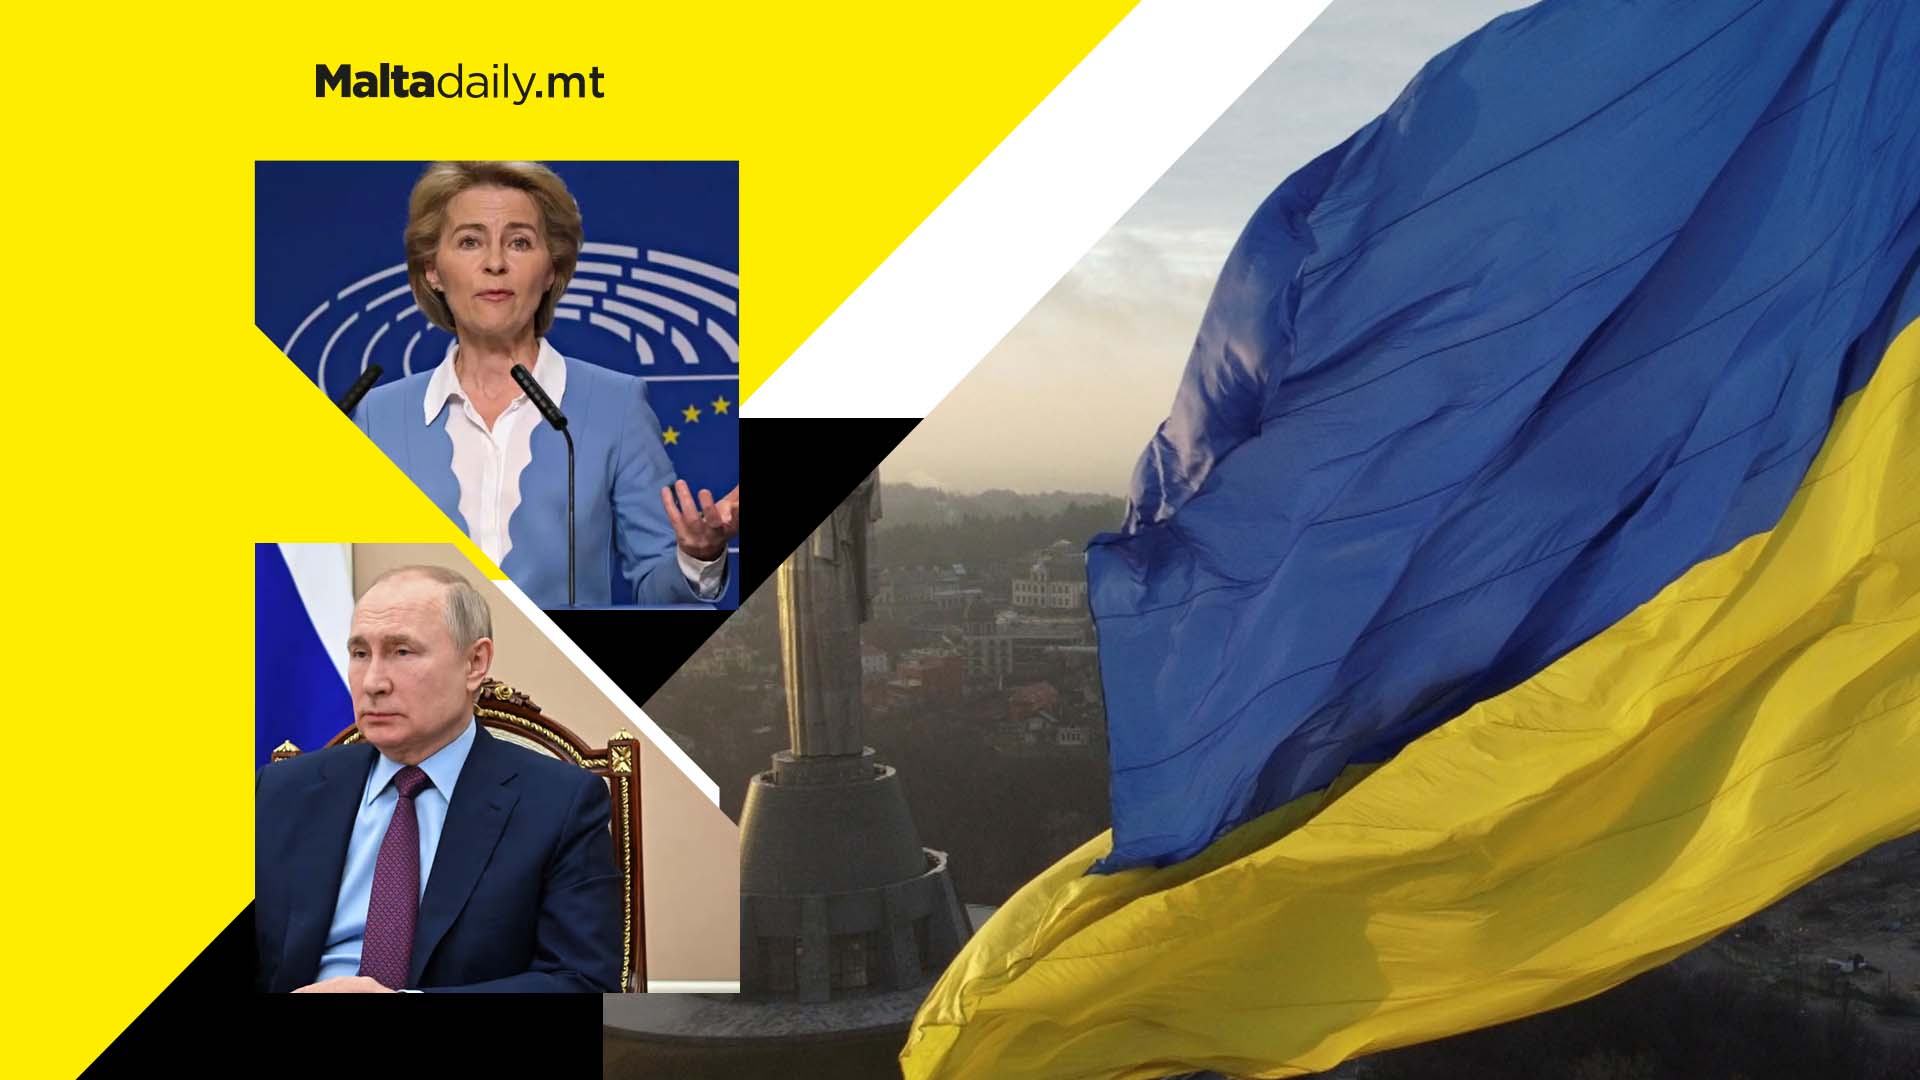 EU will finance weapons to Ukraine as Malta sends medicines